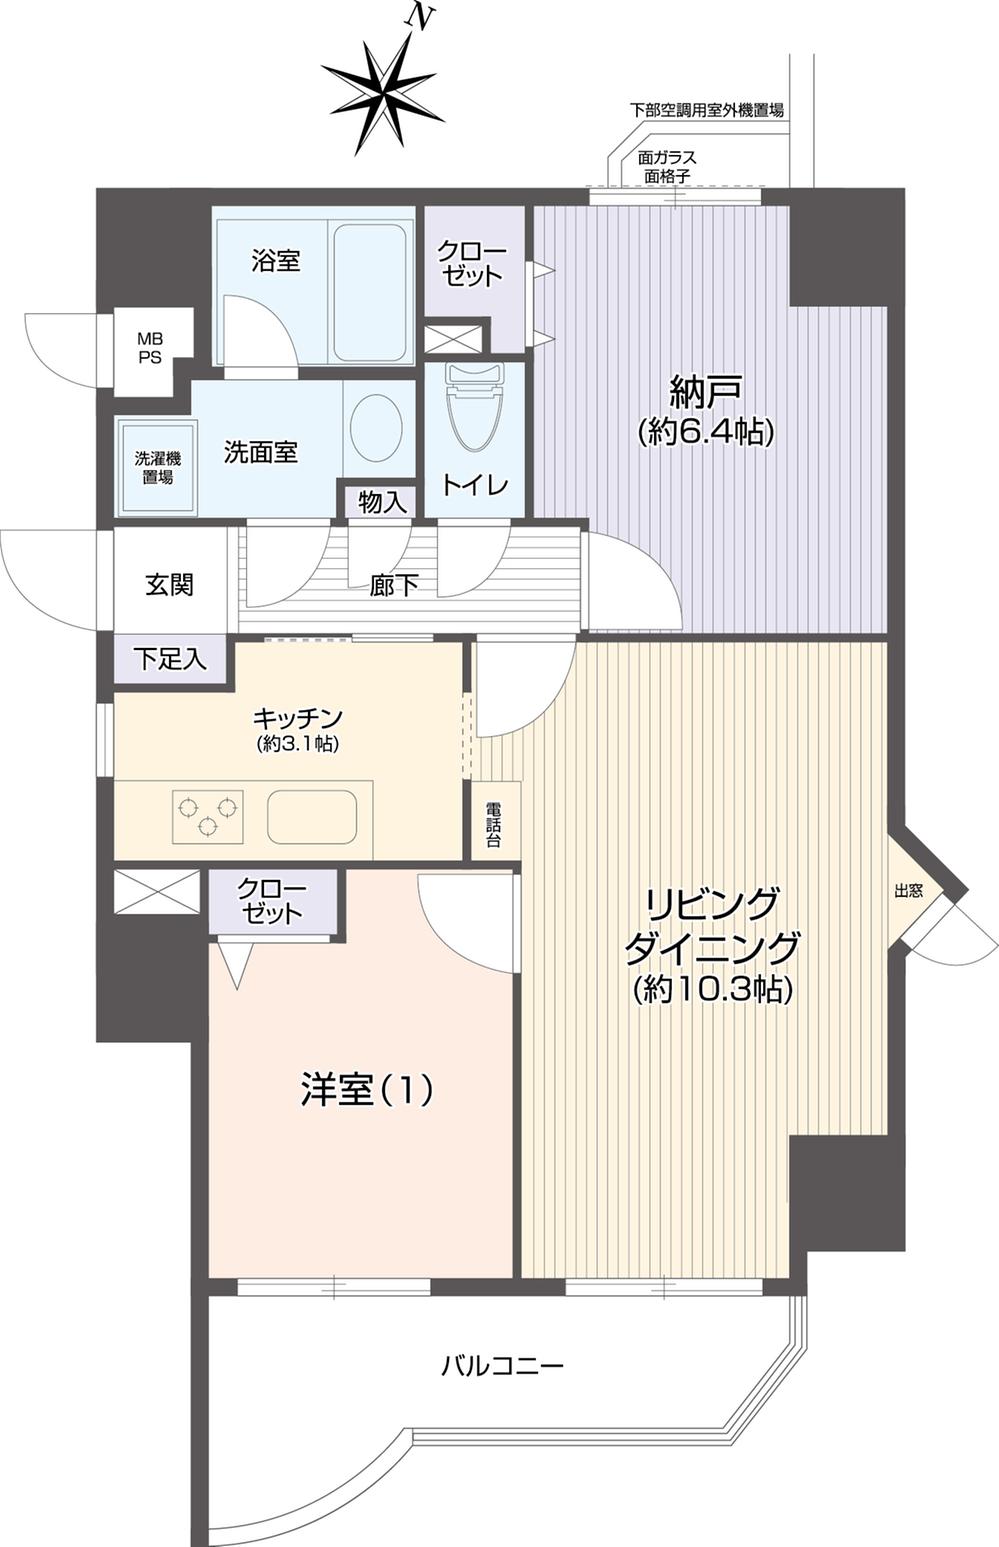 Floor plan. 1LDK + S (storeroom), Price 23.8 million yen, Occupied area 55.21 sq m , Balcony area 6.45 sq m